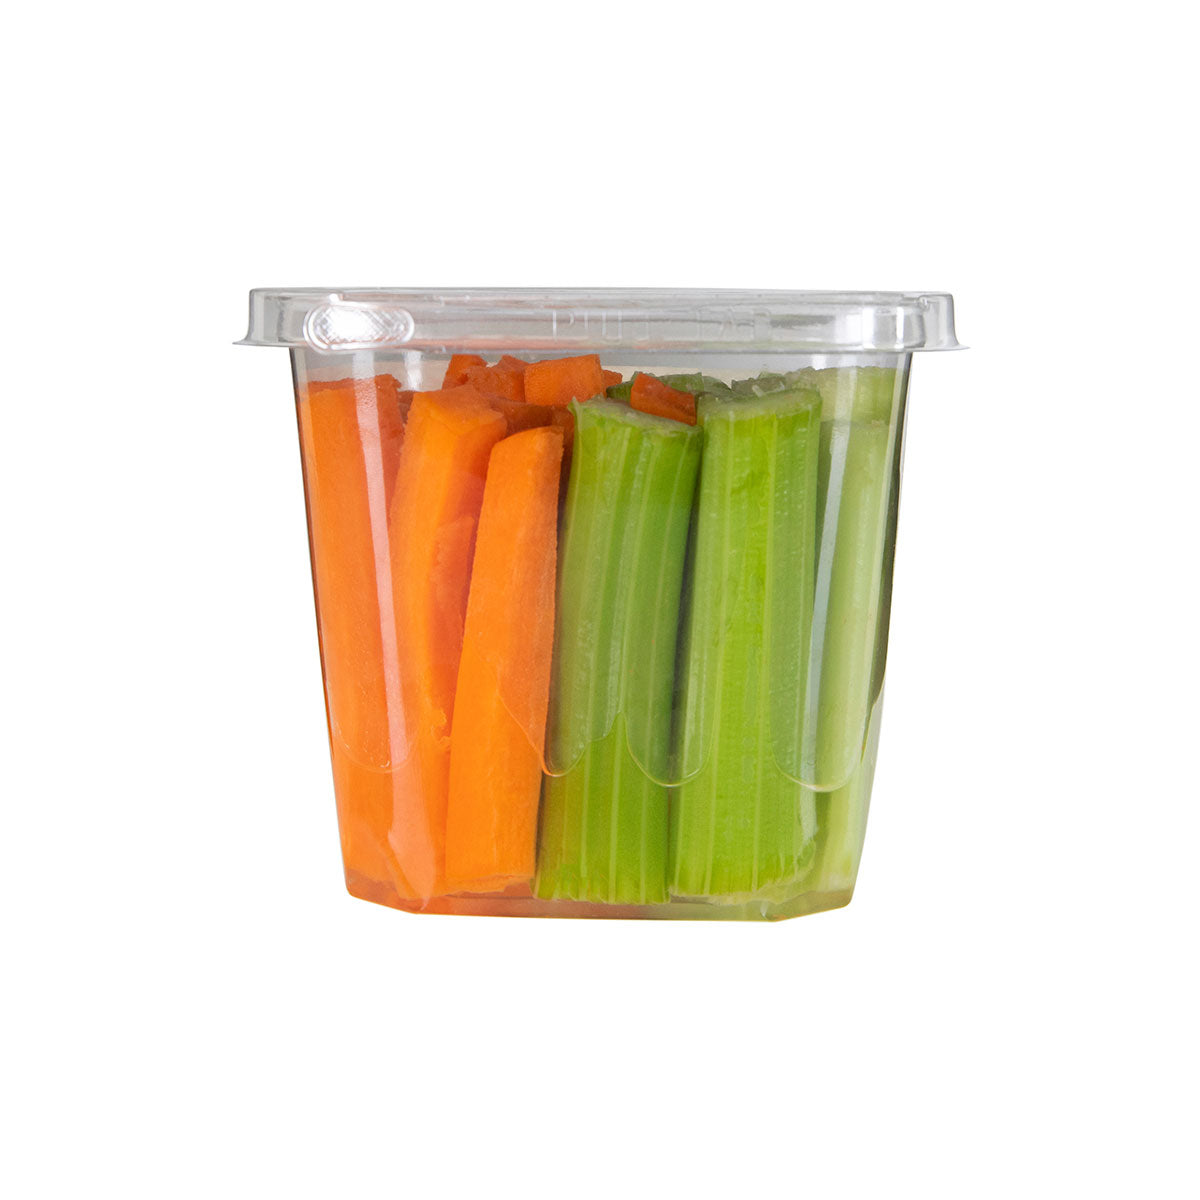 Urban Roots Organic Carrot/Celery Sticks 14 OZ